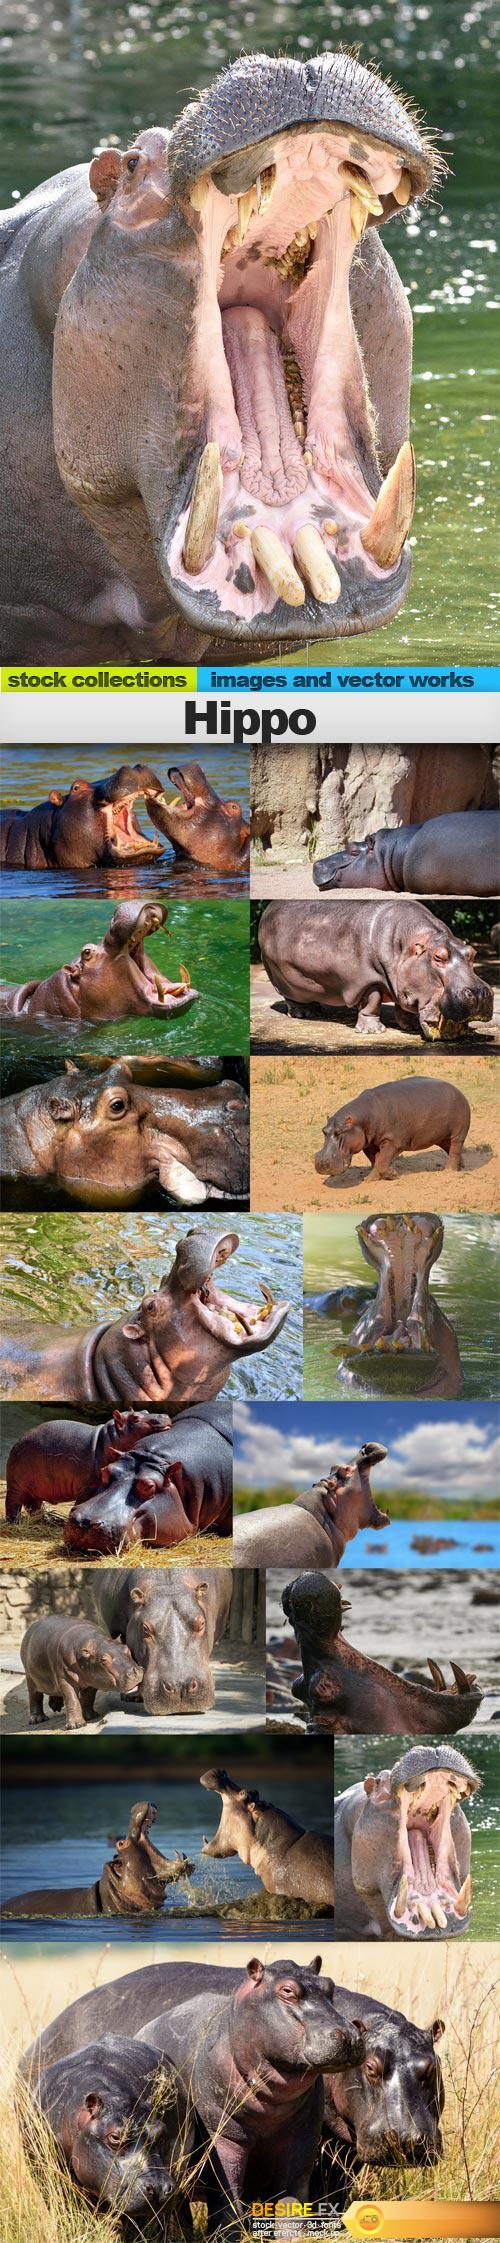 Hippo, 15 x UHQ JPEG